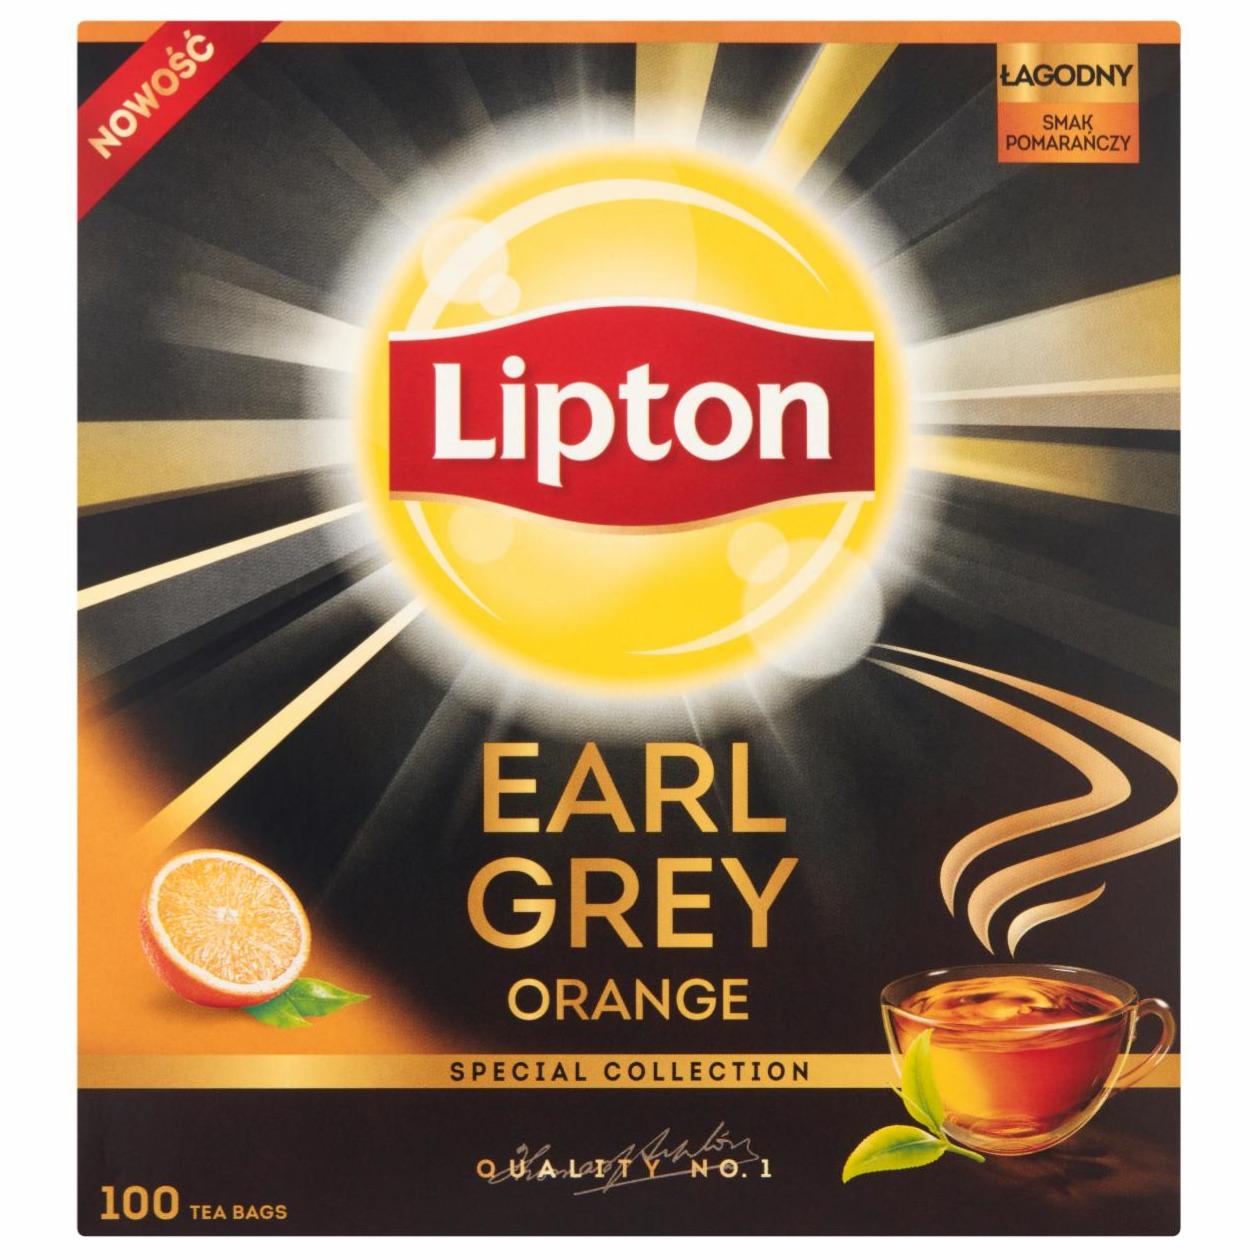 Zdjęcia - Earl Grey Orange Herbata czarna aromatyzowana Lipton